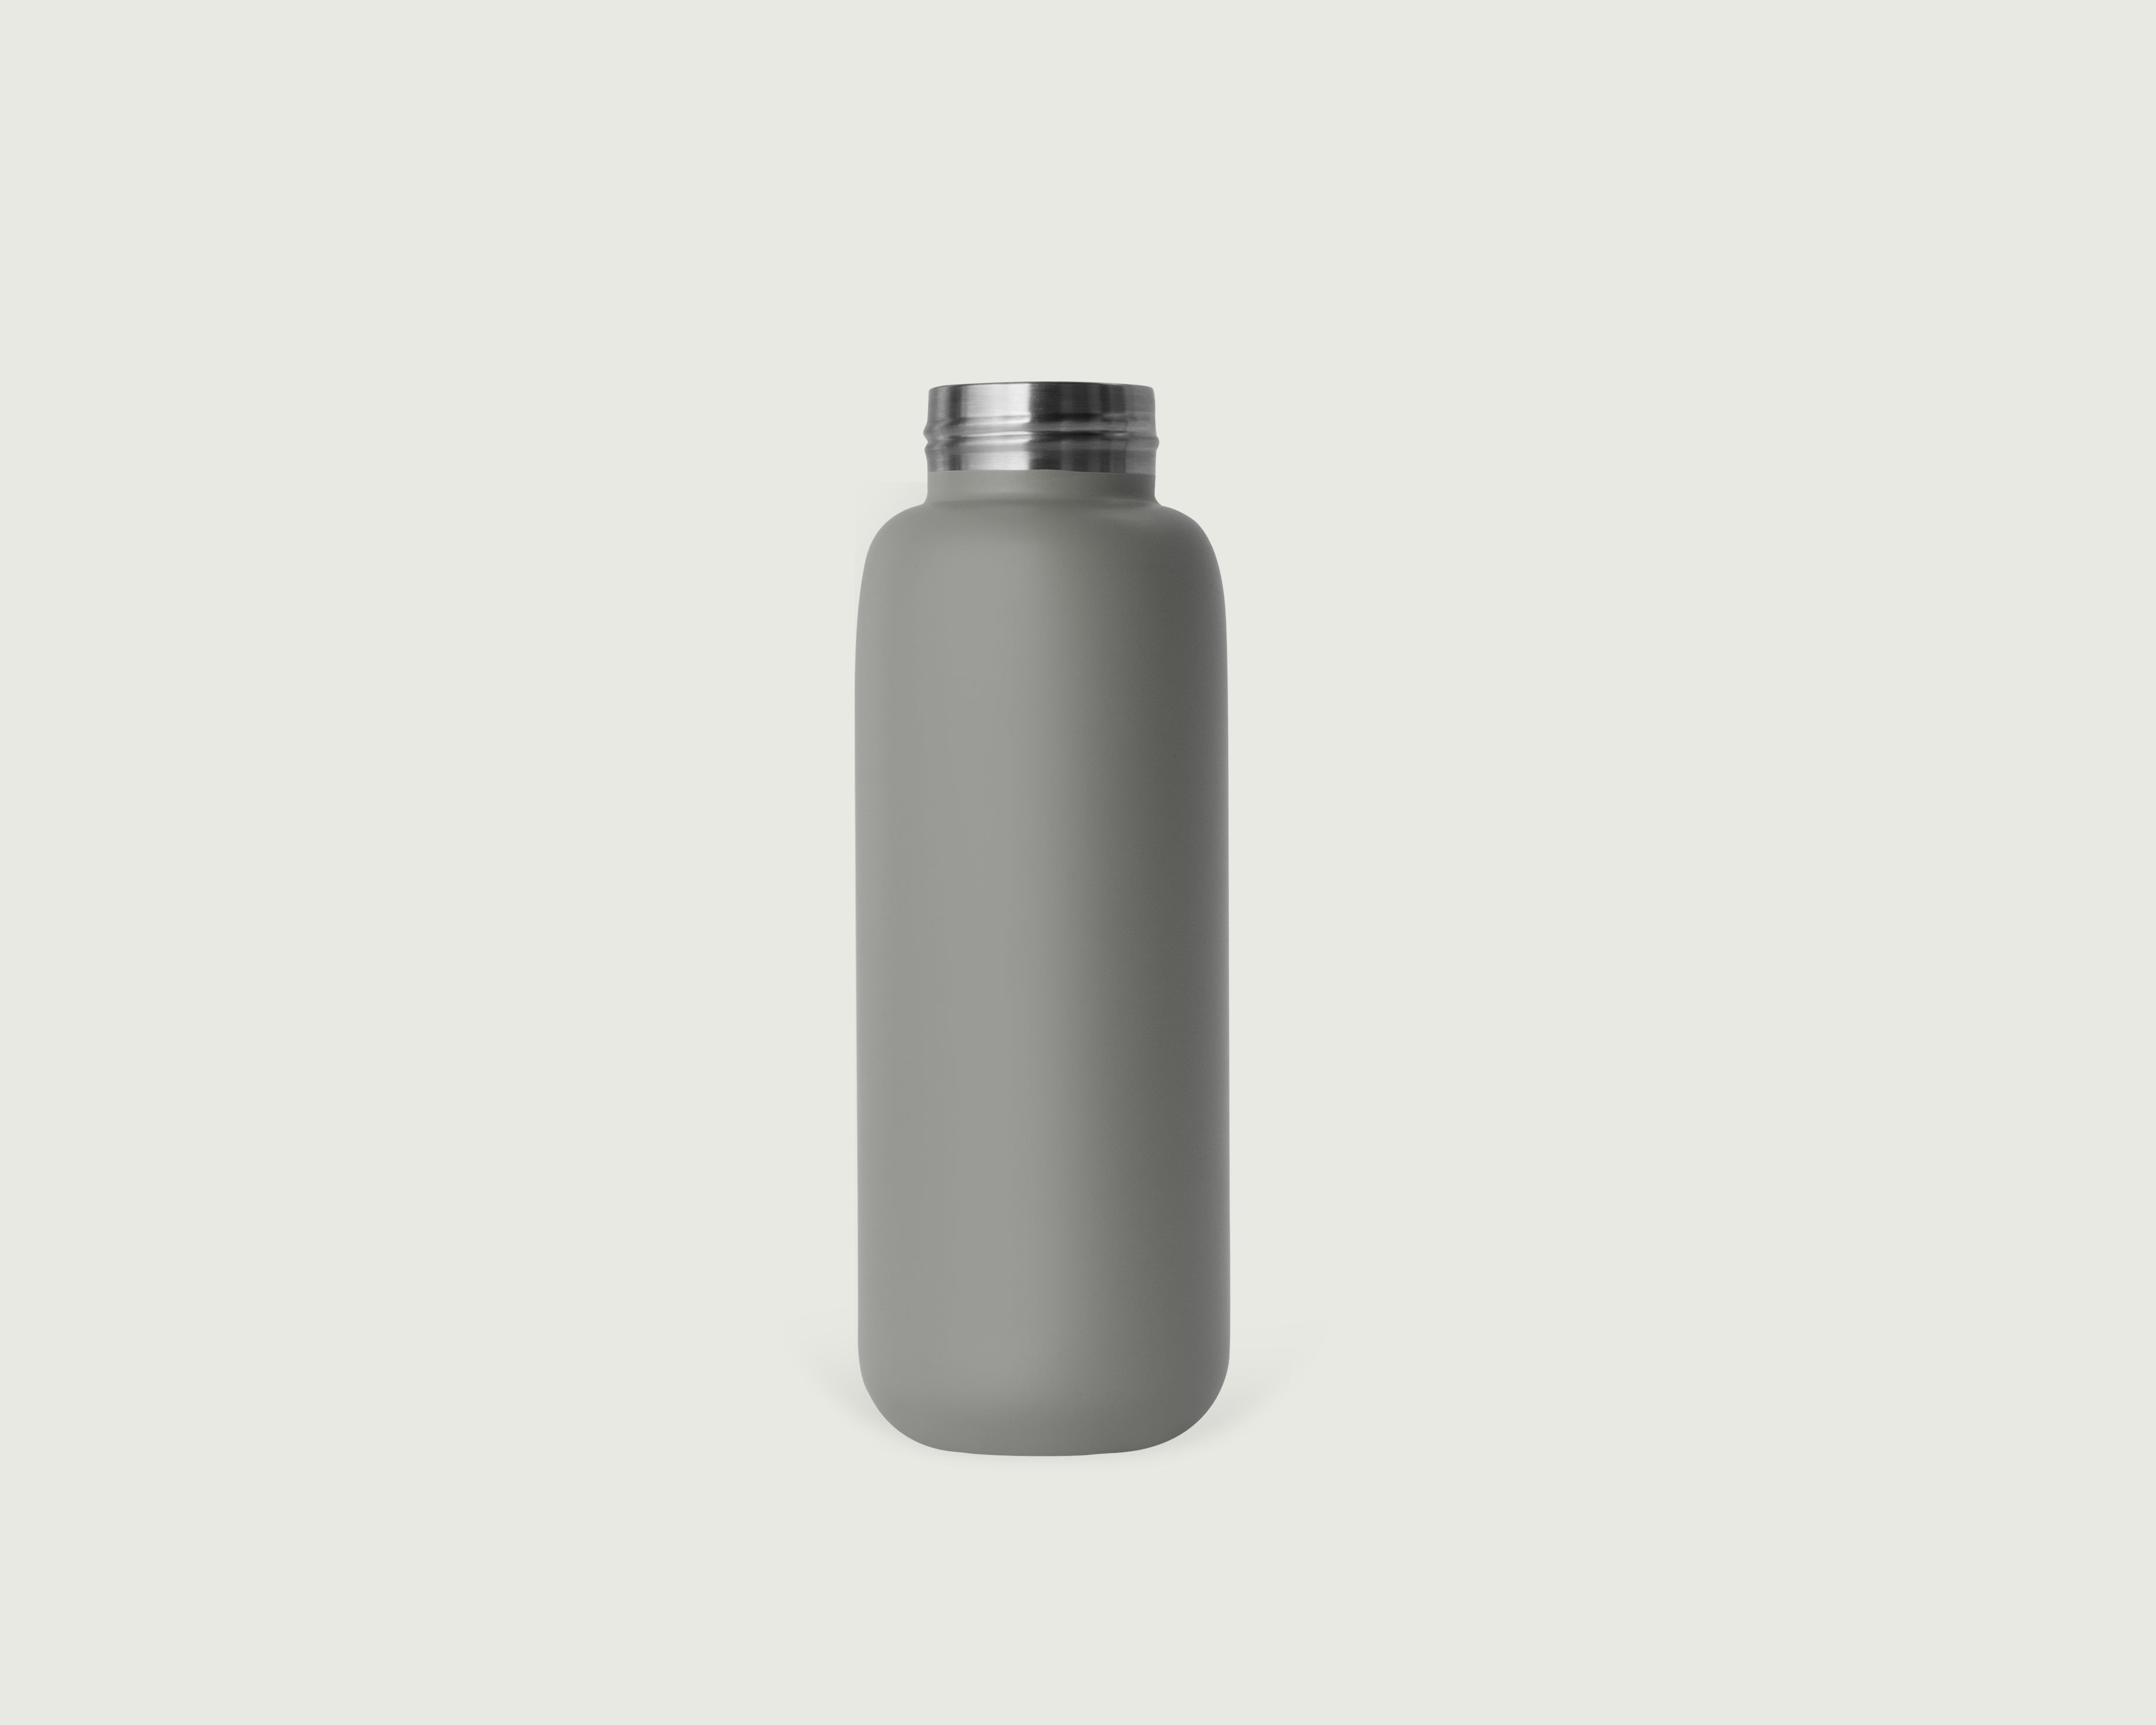 Oyster::Flask tumbler bottle gray  front